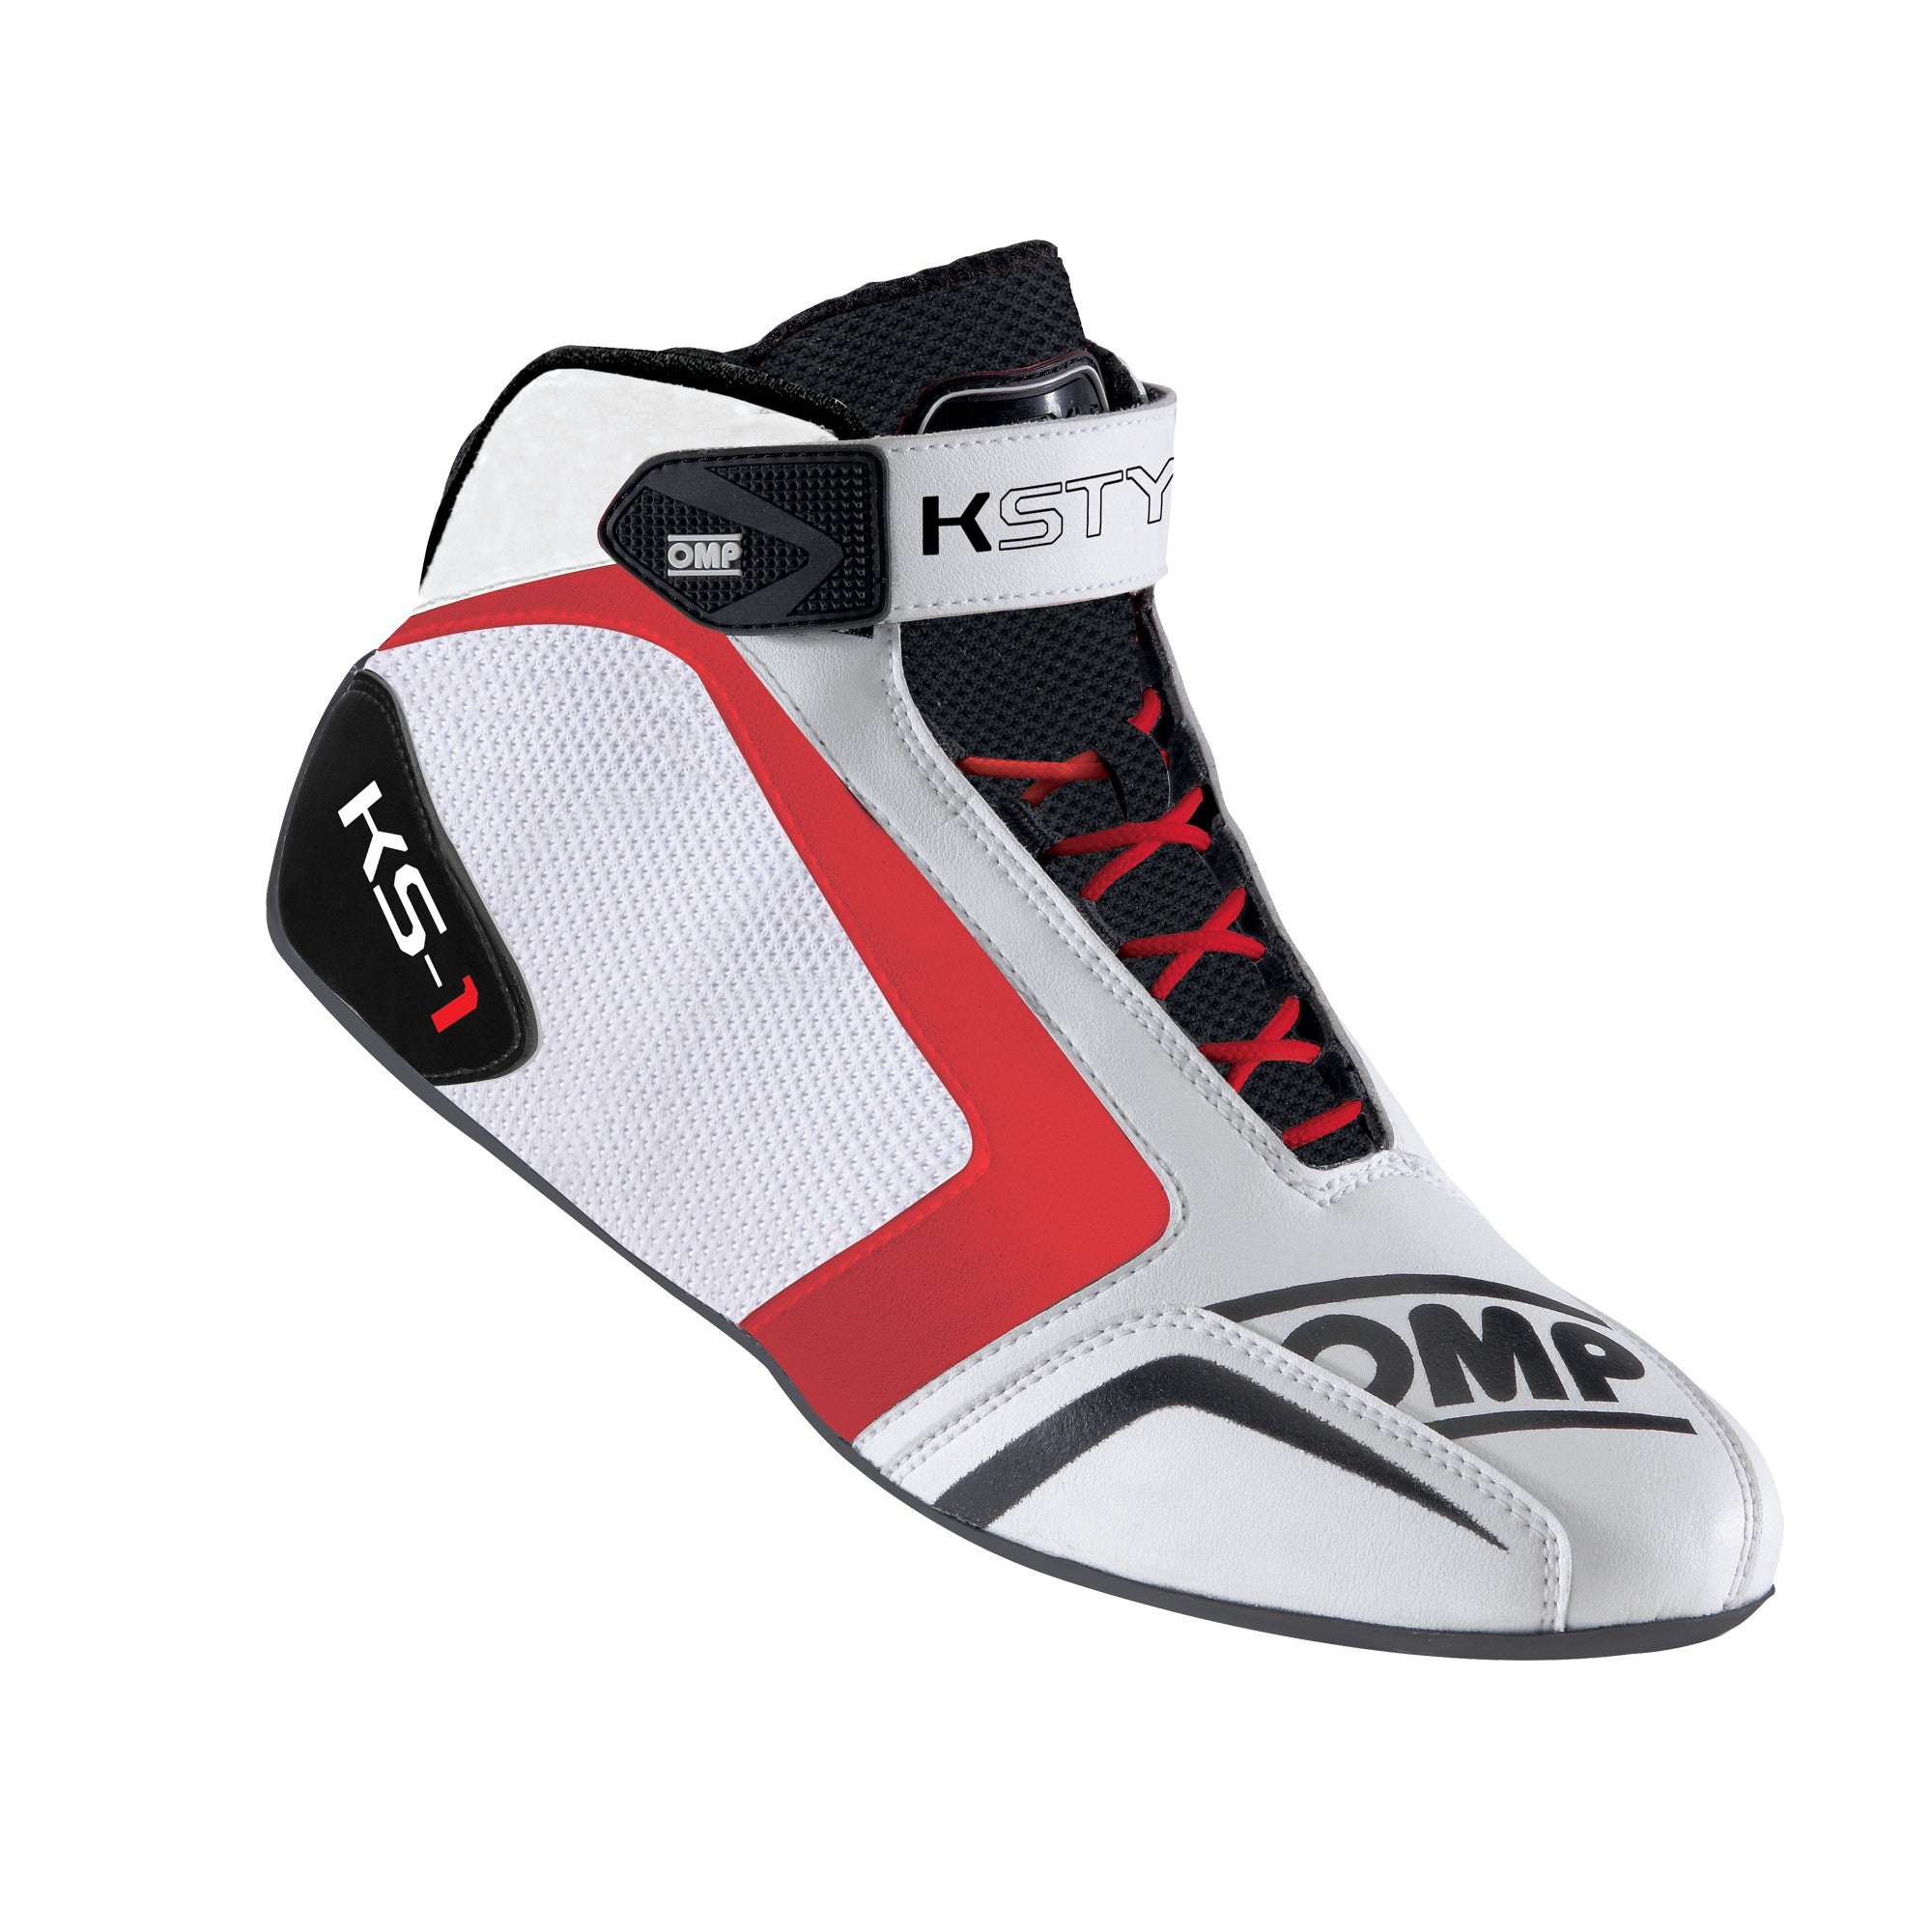 OMP KC0-0815-A01-120-44 (IC/81512044) Kart shoes KS-1, white/black/red, size 44 Photo-0 